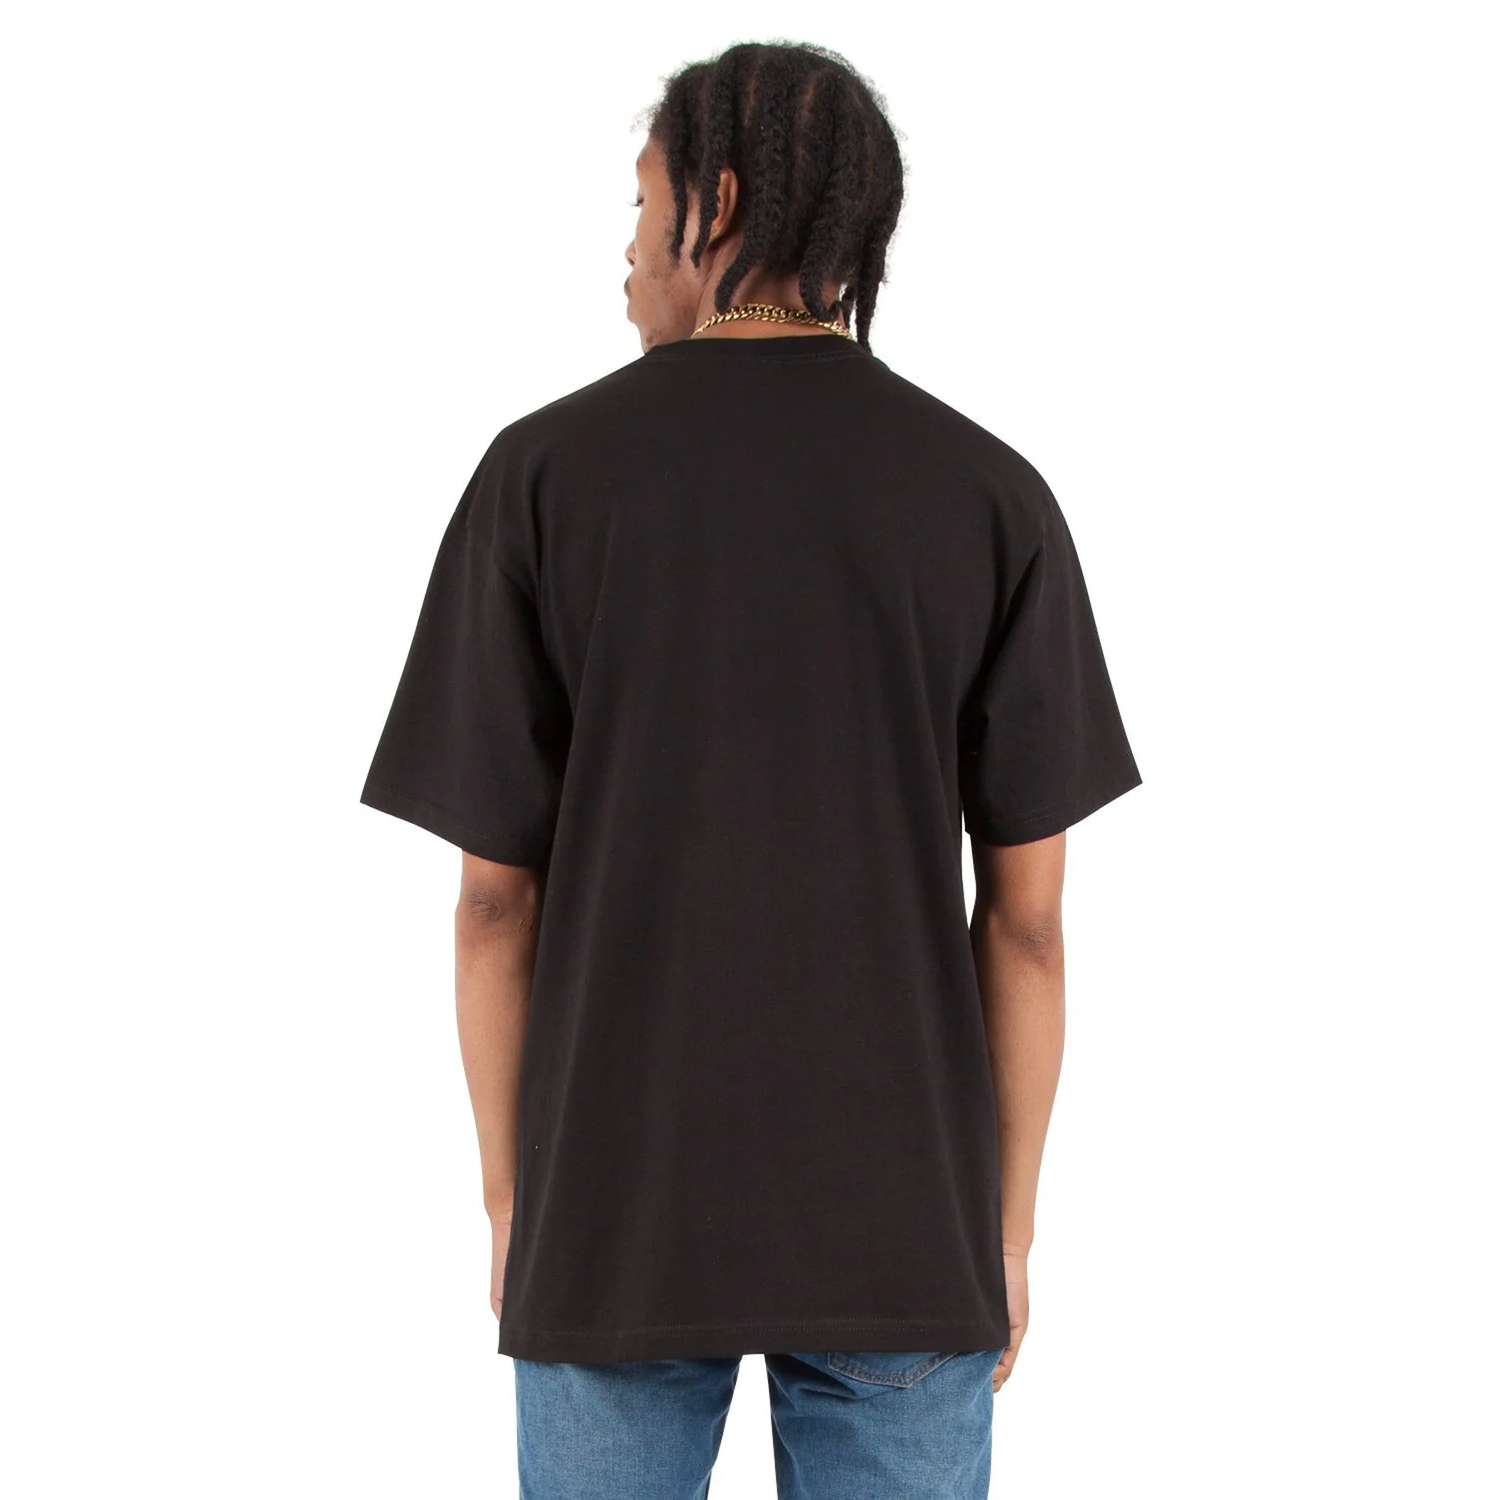 Shakawear 7.5 oz Max Heavyweight Short Sleeve T-shirt - Premium Quality, Ultimate Comfort, Unmatched Durability